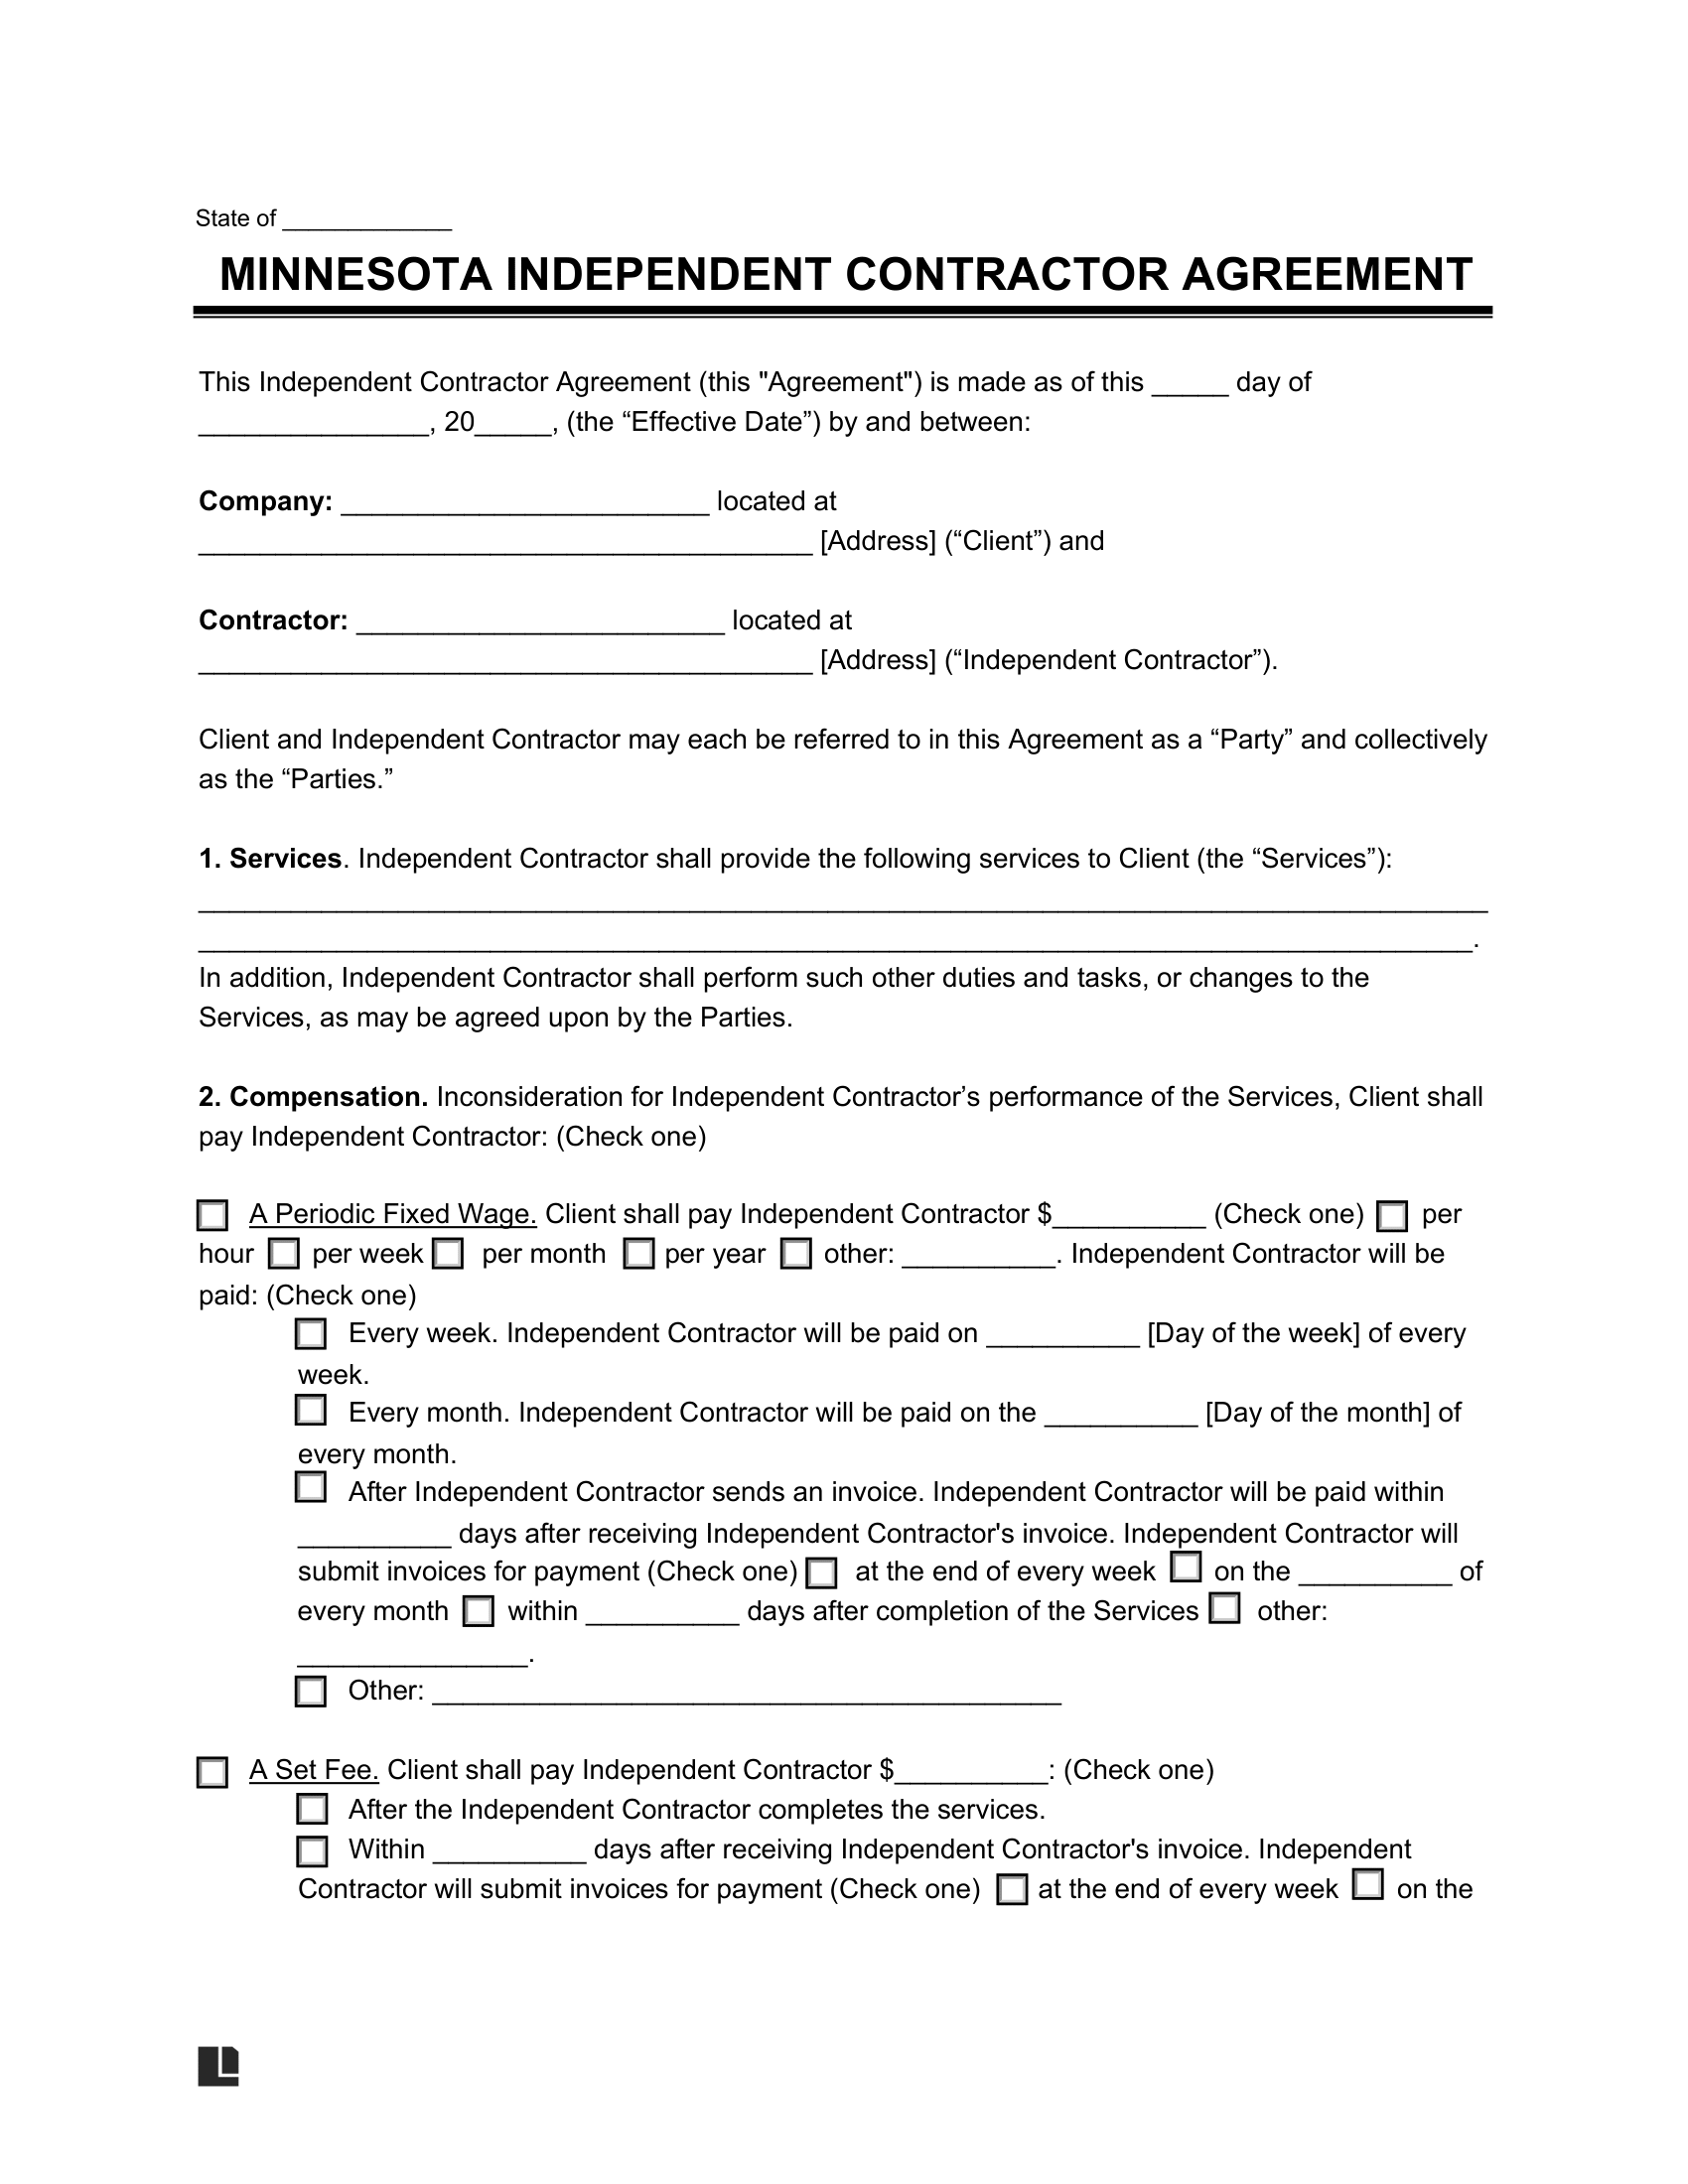 Minnesota Independent Contractor Agreement